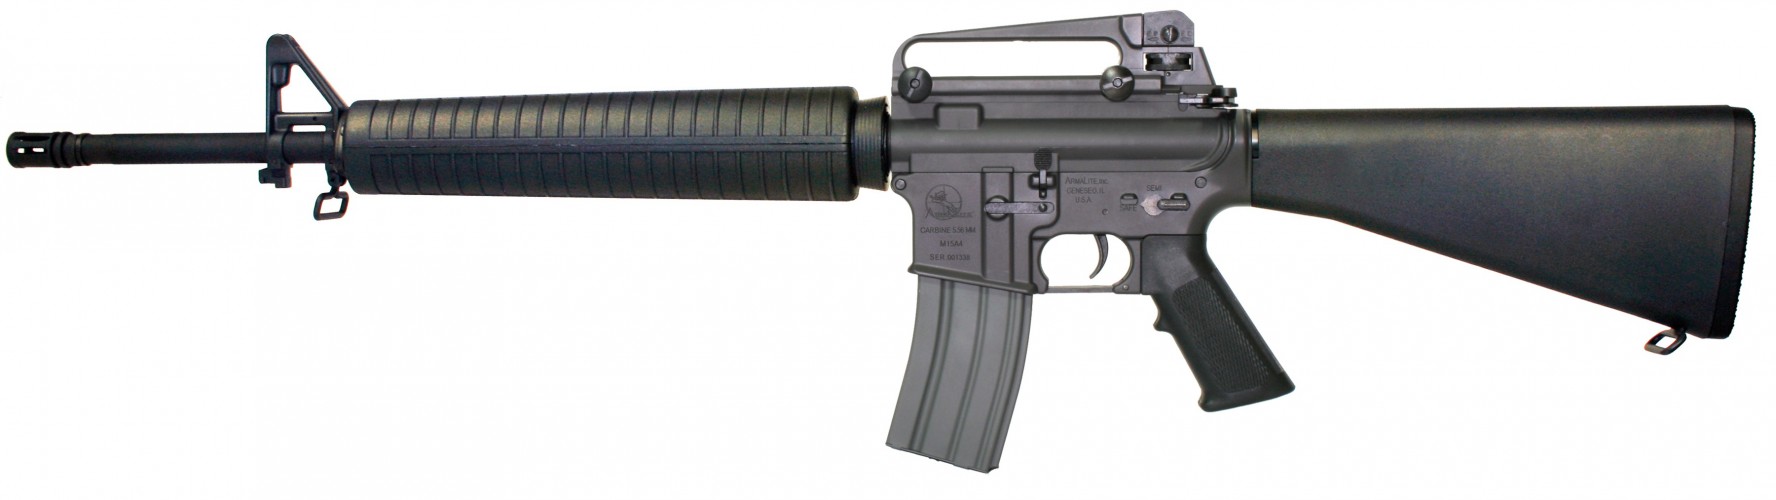 M16 Rifle Sportline